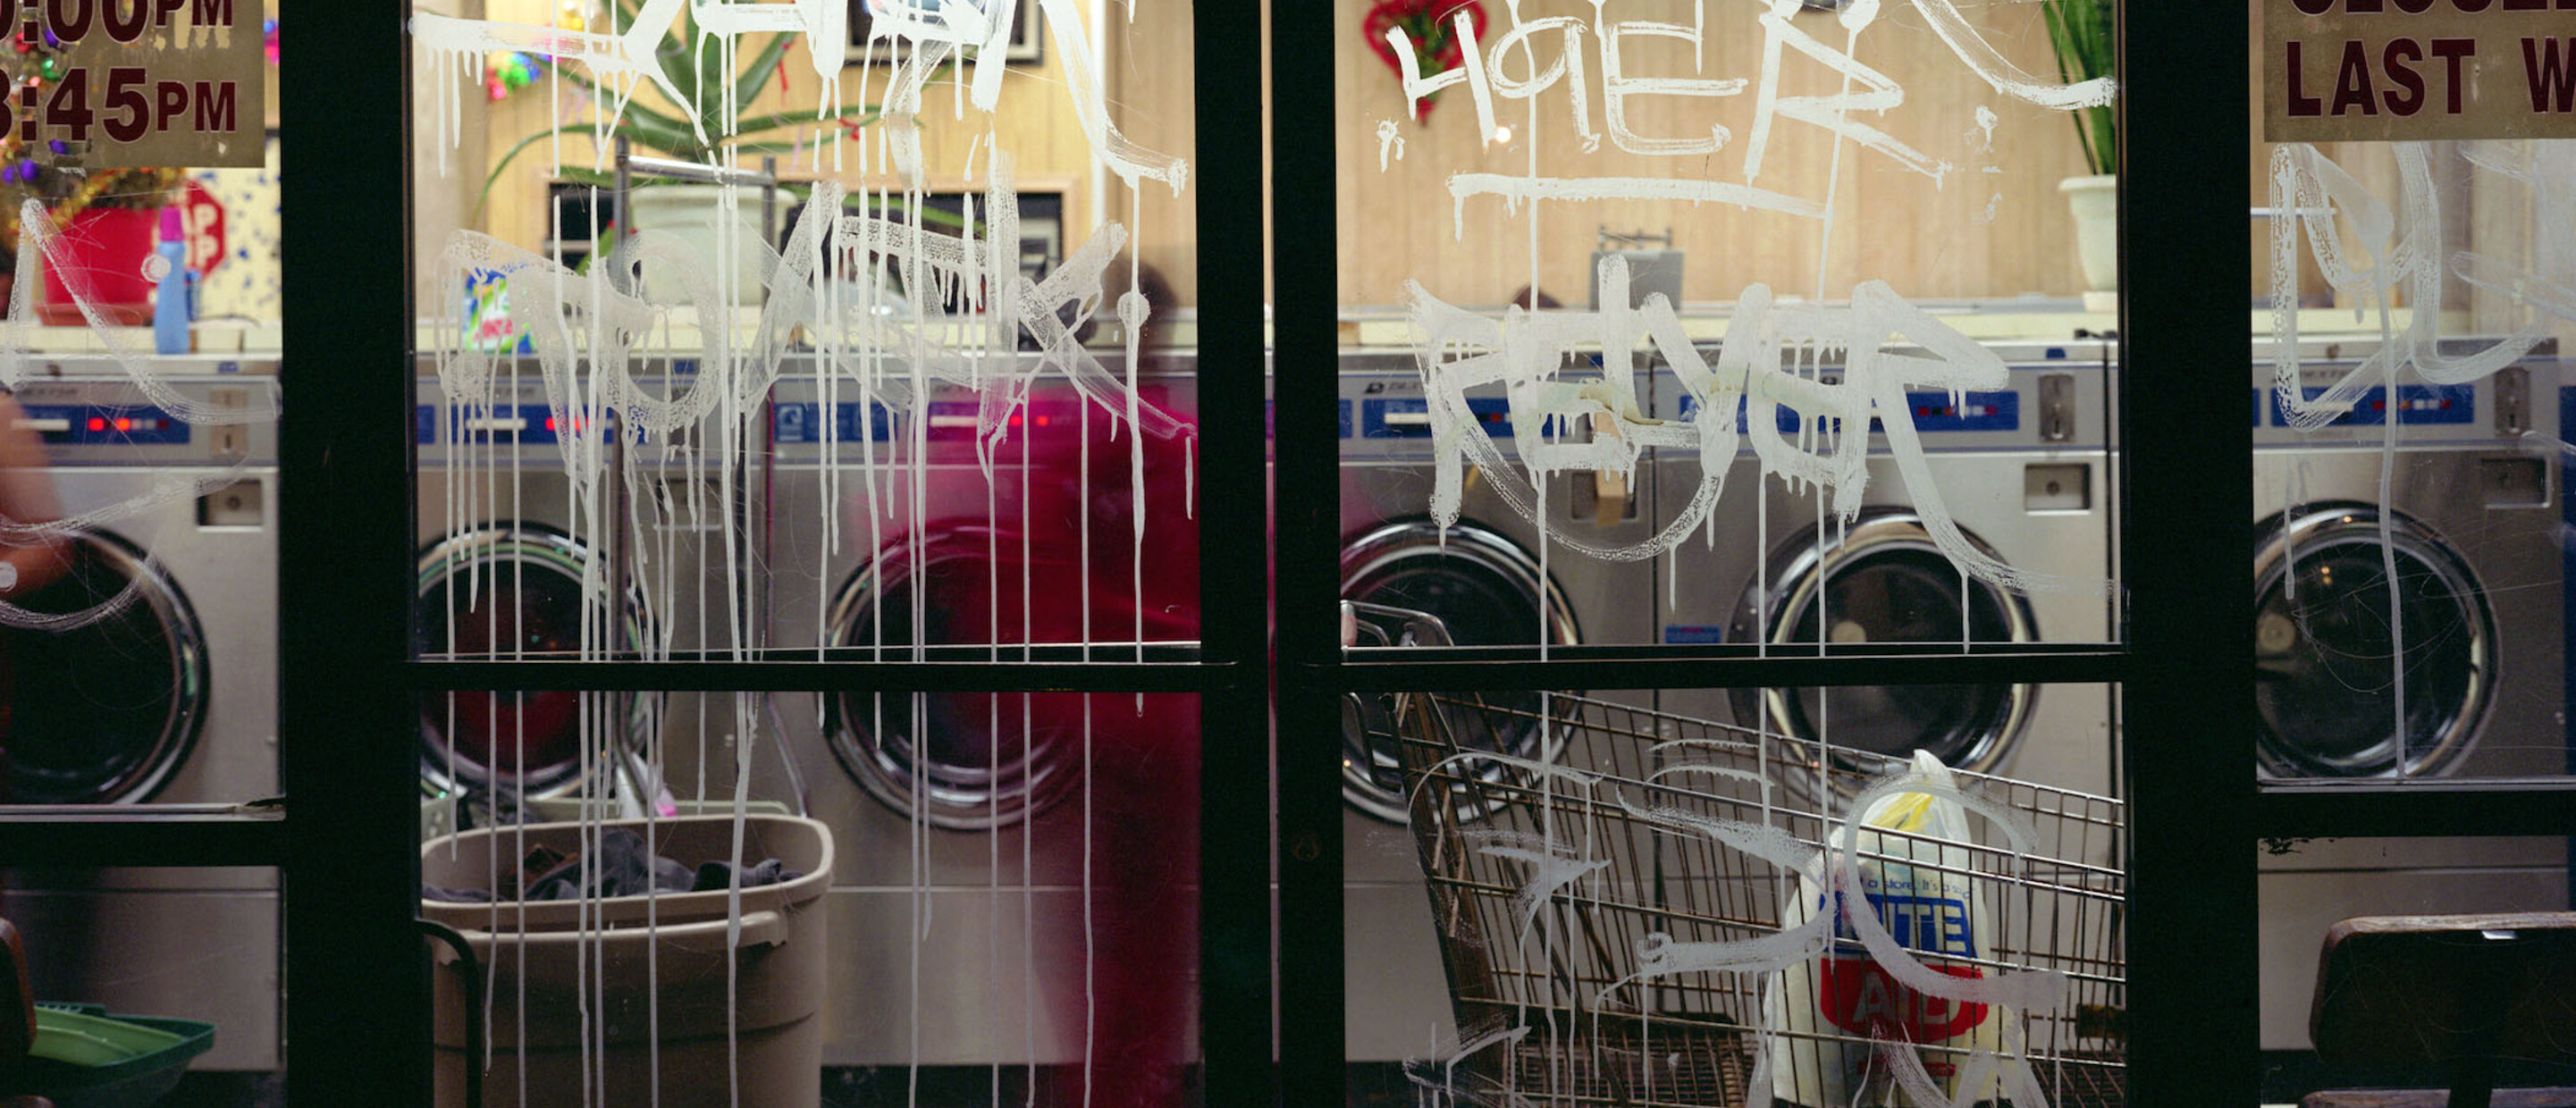 Photograph of a lavanderia with graffiti'ed glass doors